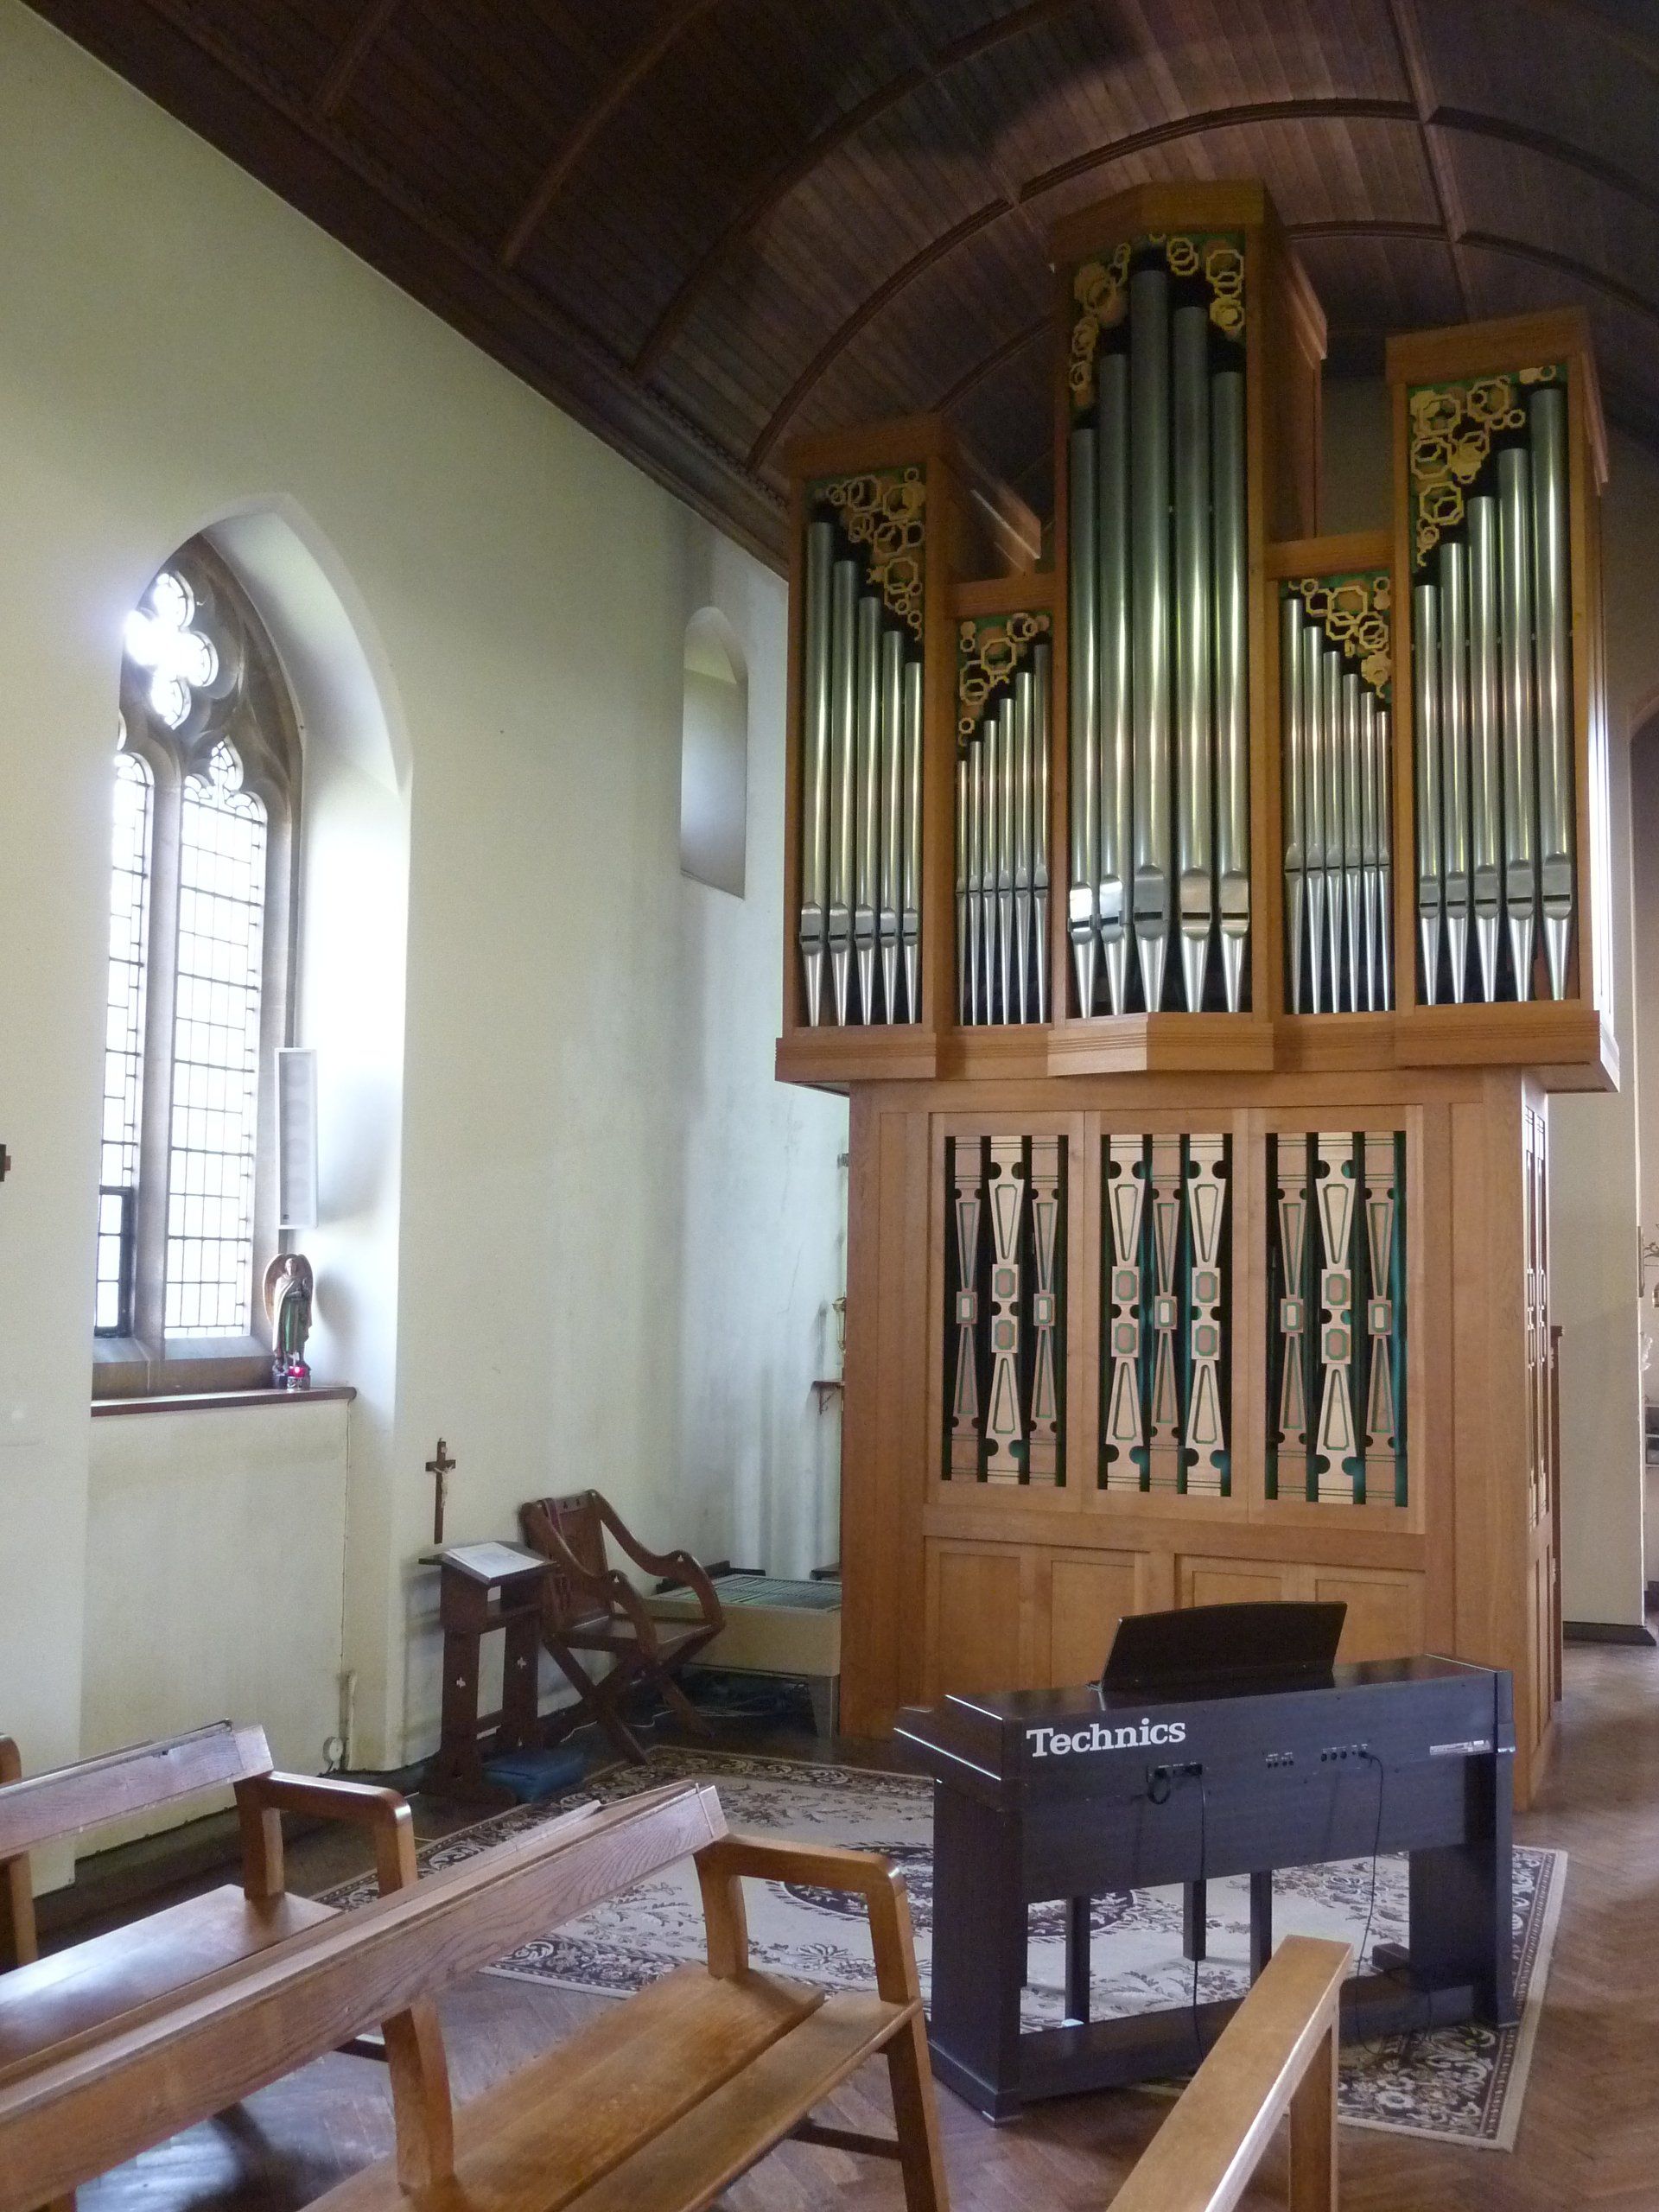 View towards organ (inside St Michael's Church)